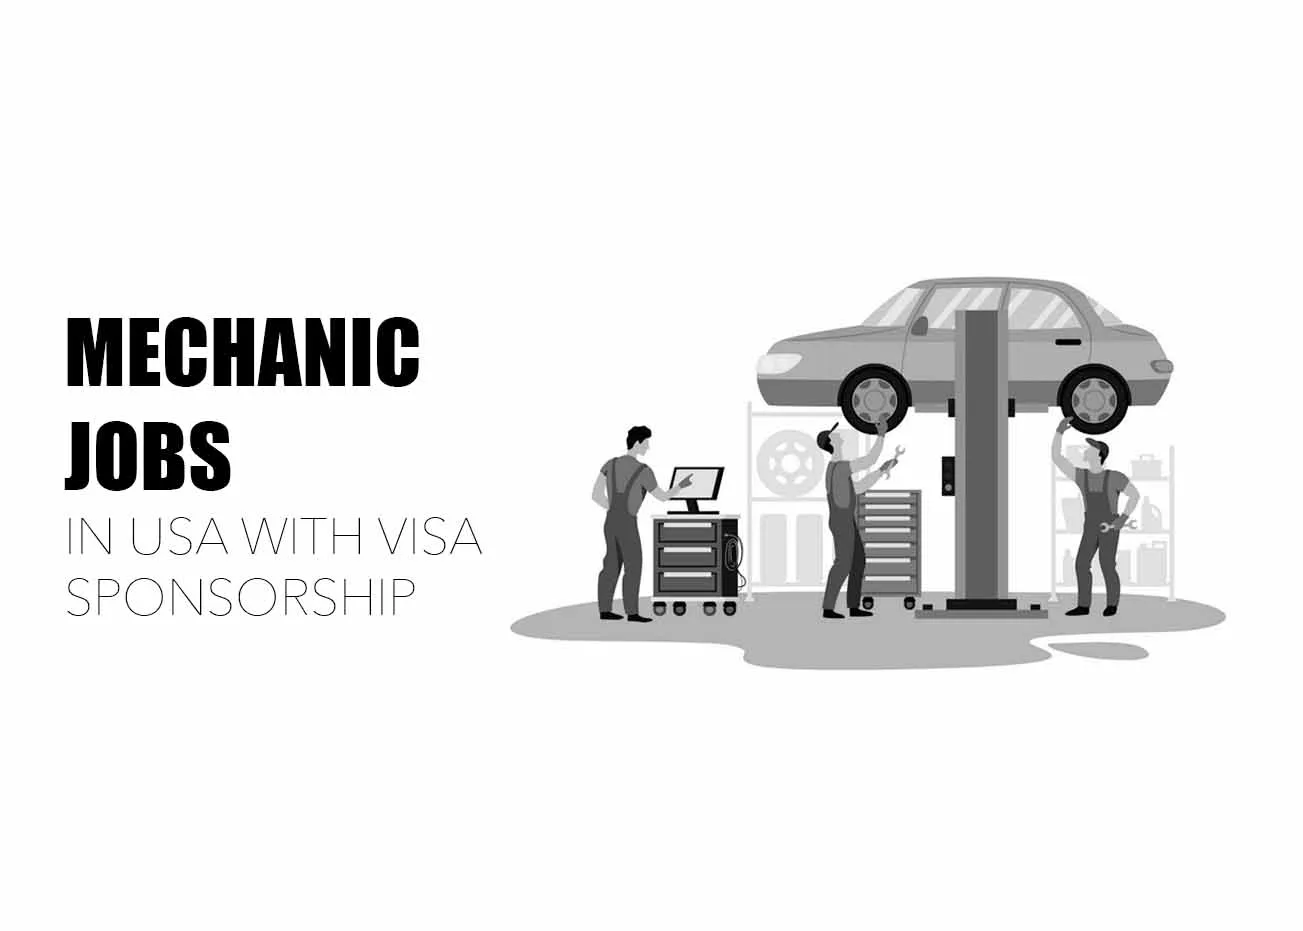 Mechanic Jobs in USA with Visa Sponsorship